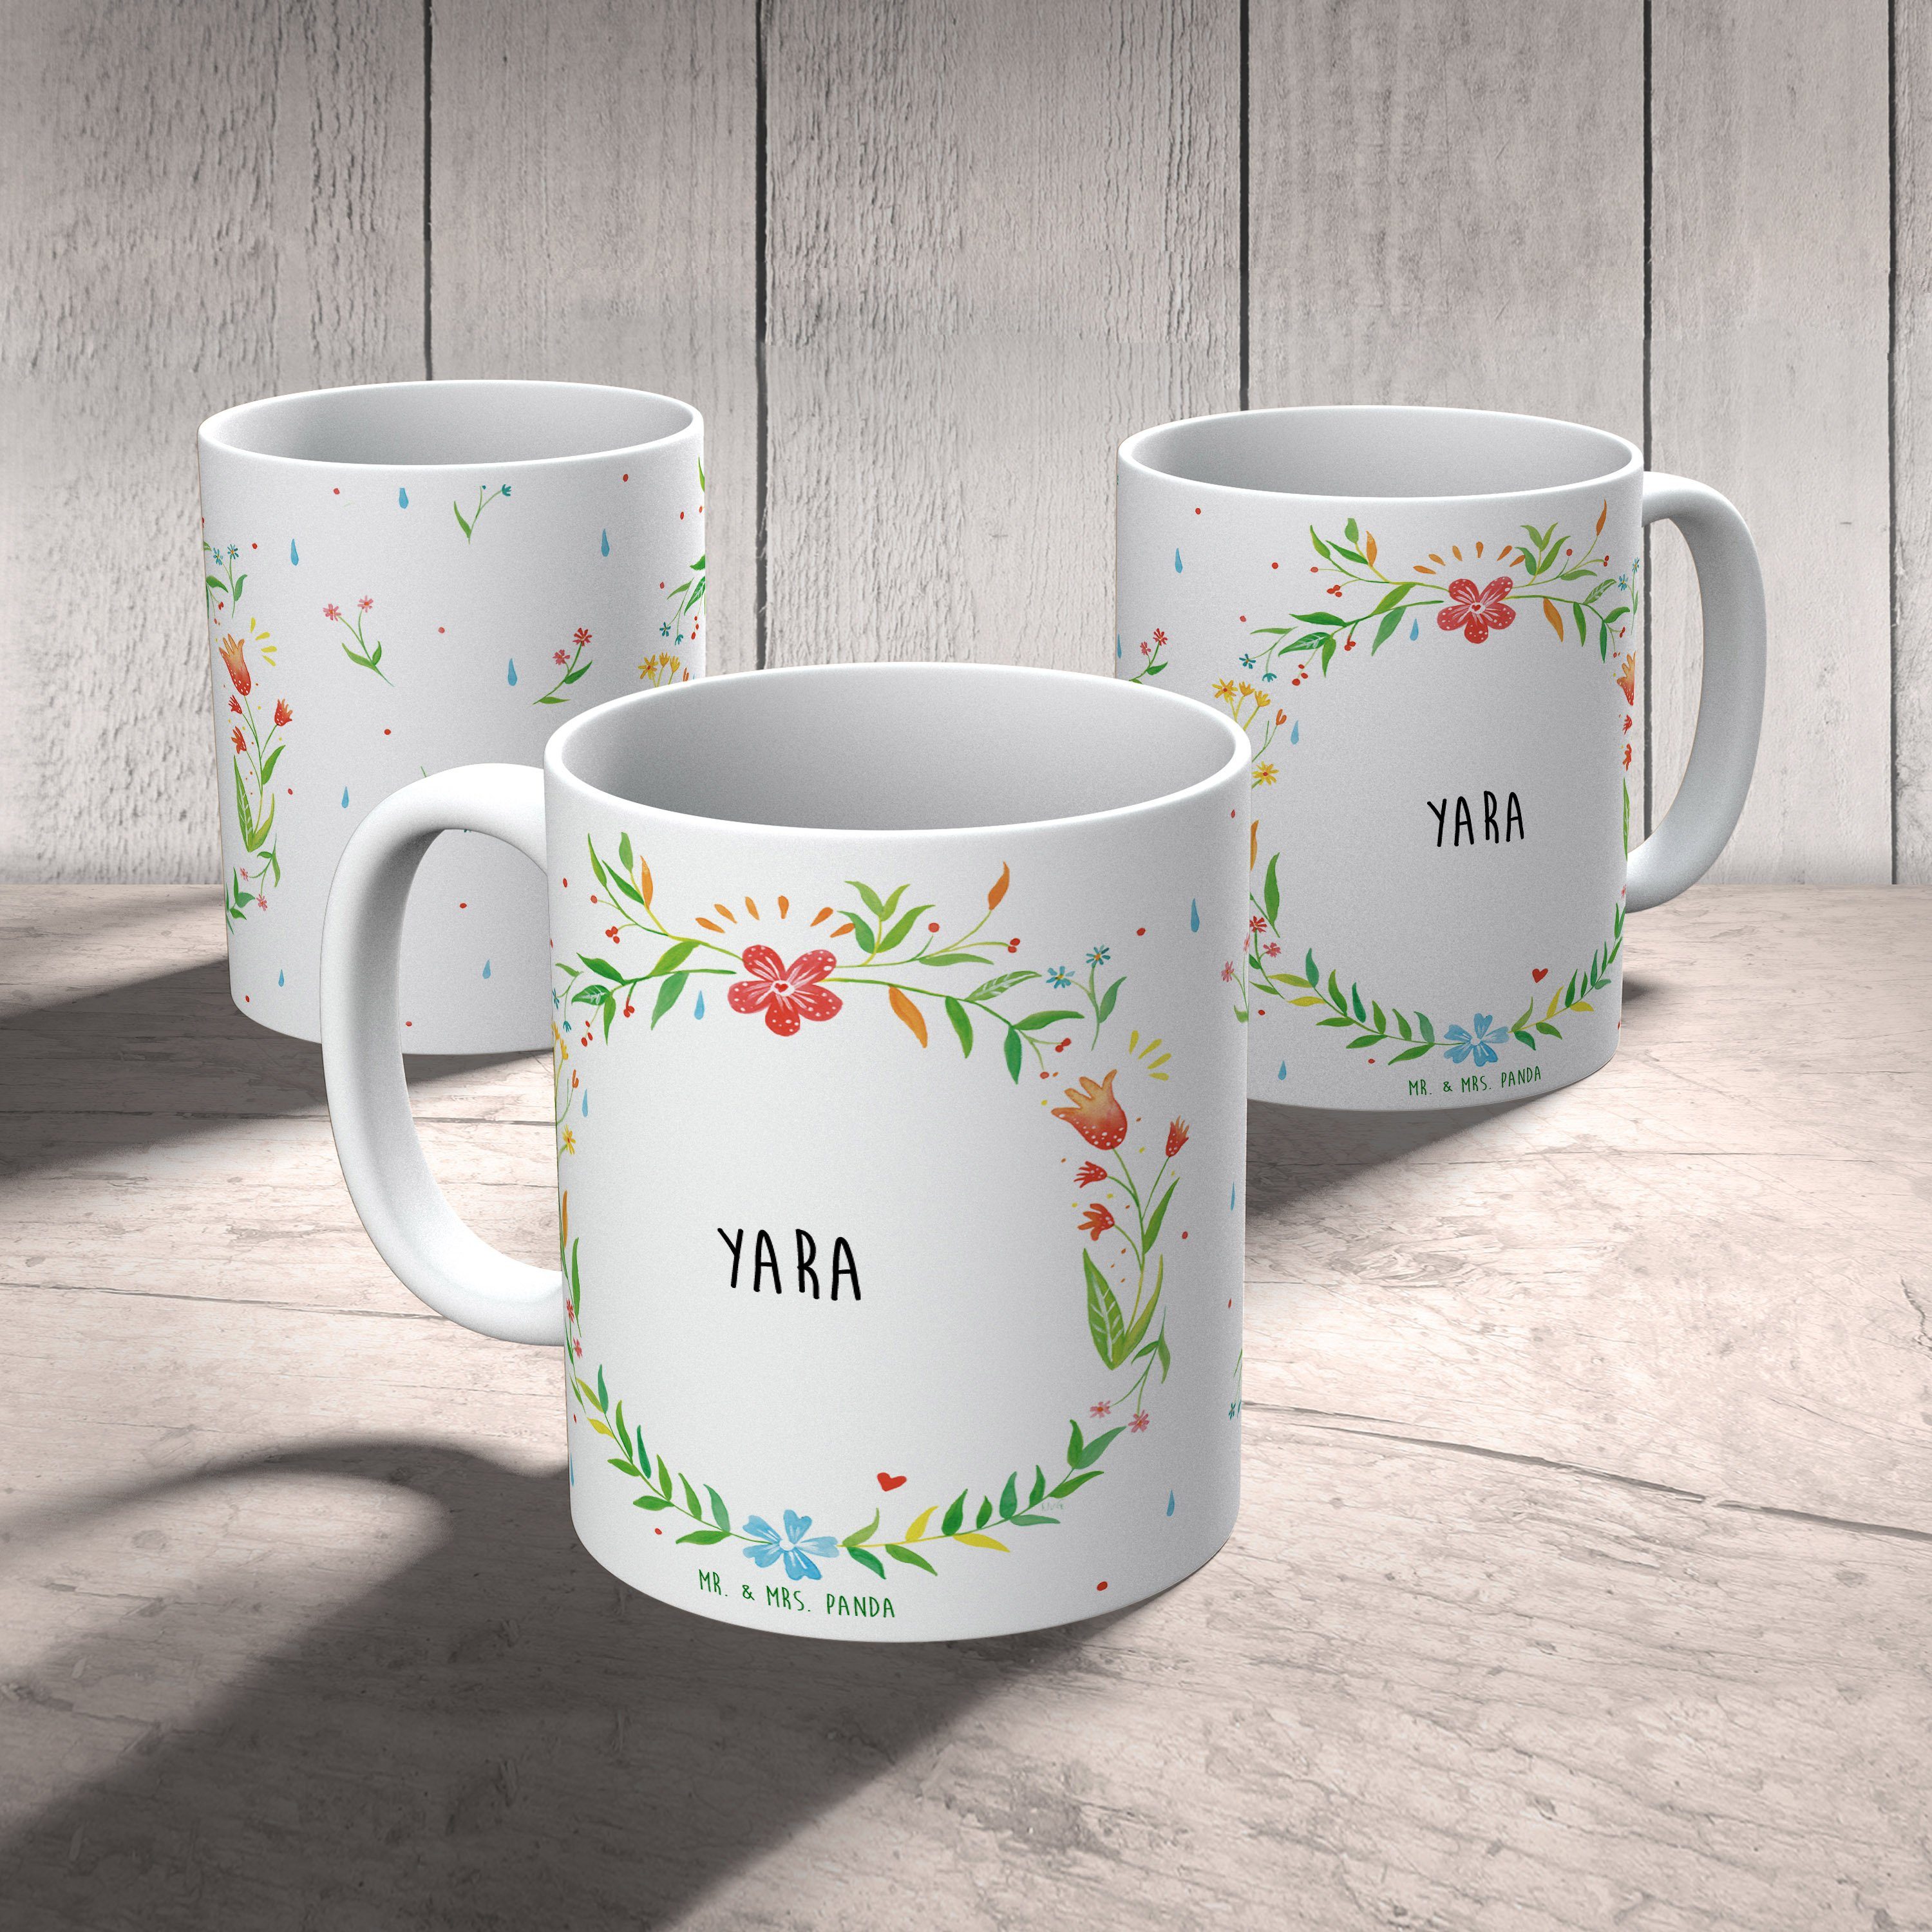 Mr. & Mrs. Panda Tasse - Tasse Yara Geschenk, Tasse, Kaffee, Geschenk Keramik Motive, Porzellantasse